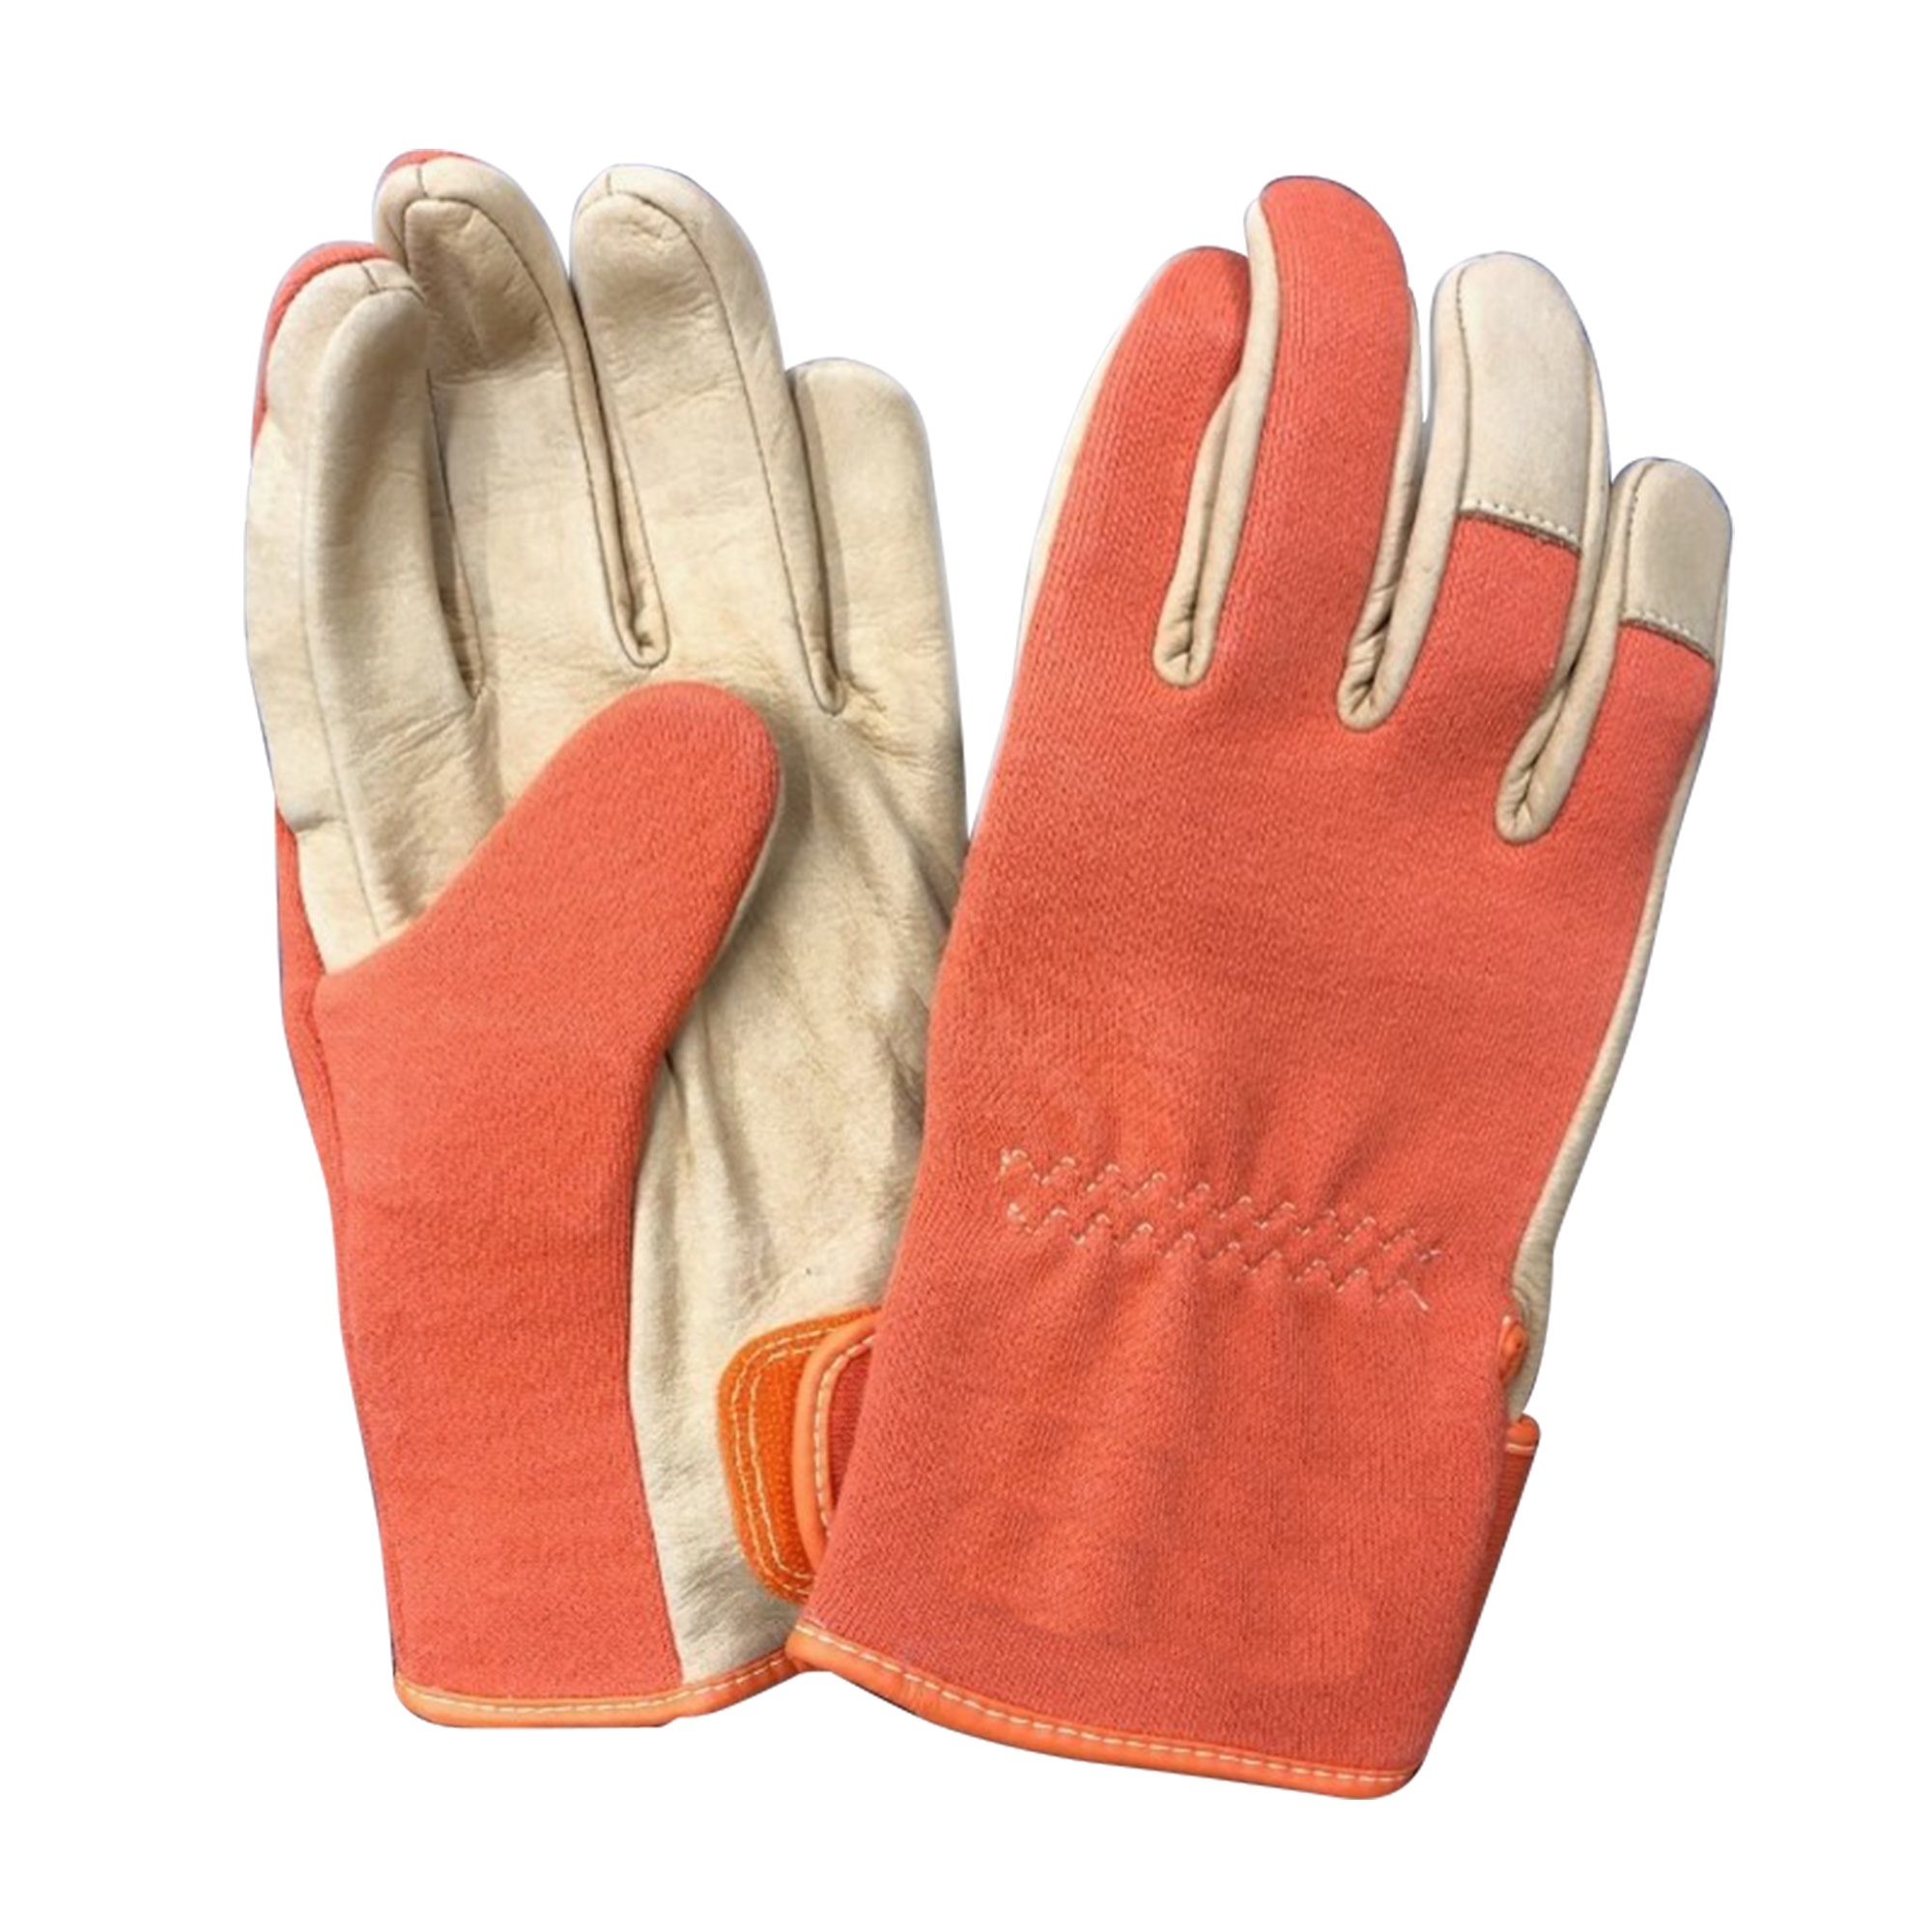 https://www.optosigma.com/media/catalog/category/Yamamoto_Laser_Safety_Gloves-No_Logo.jpg